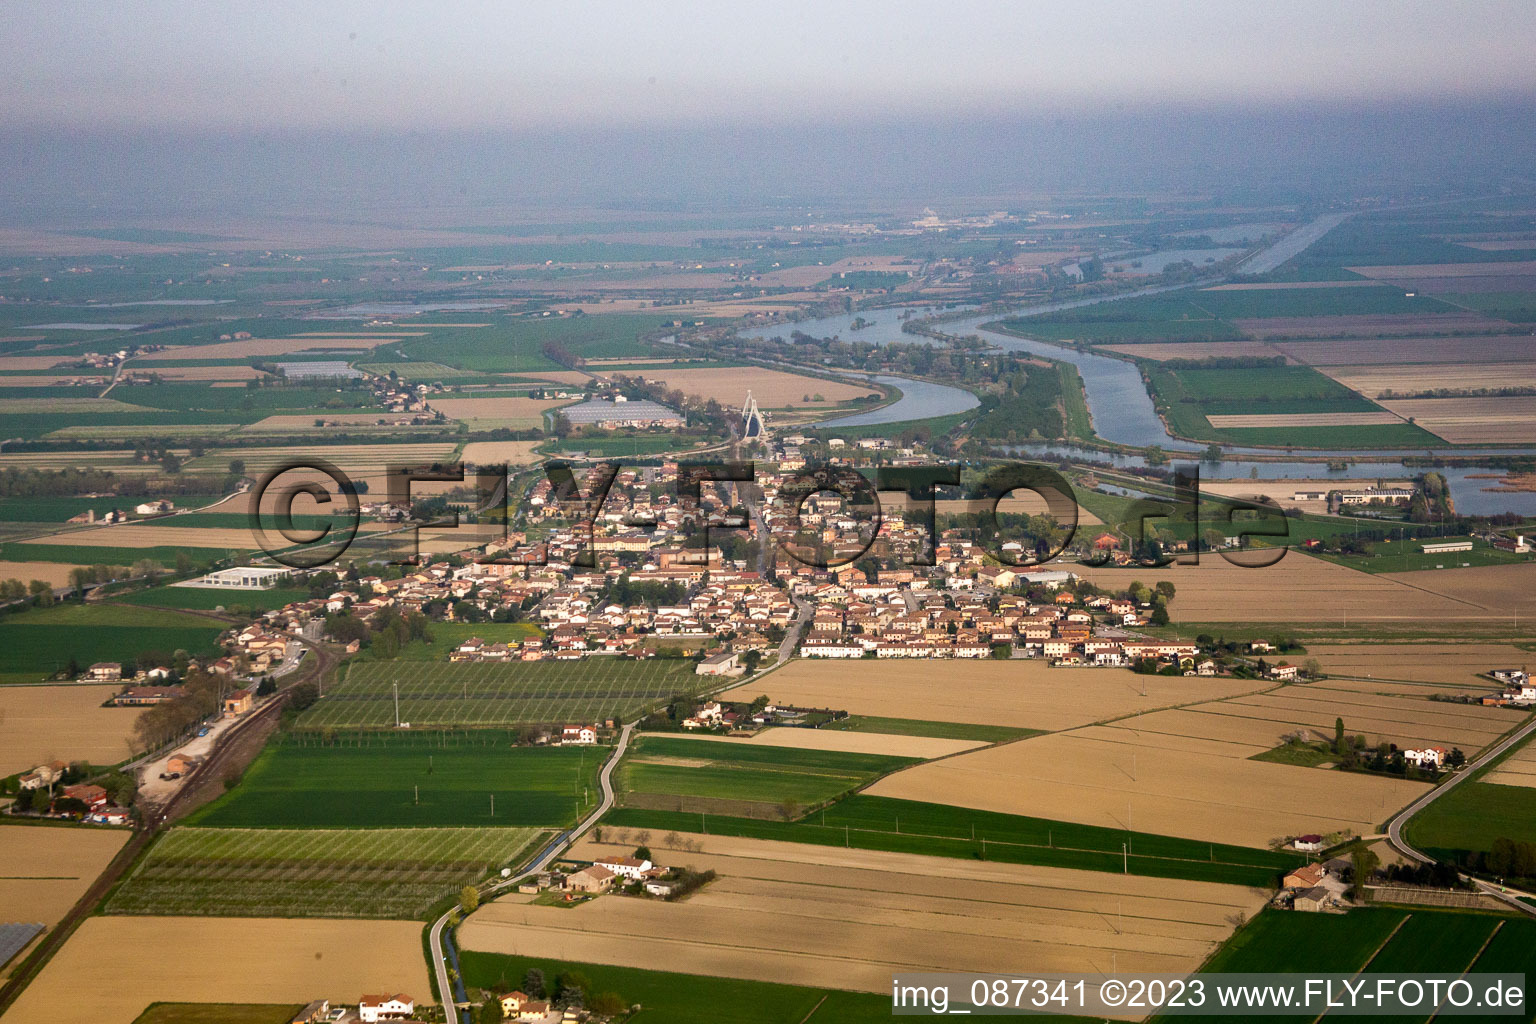 Luftbild von Ostellato(I-Emilia-Romagna), Italien